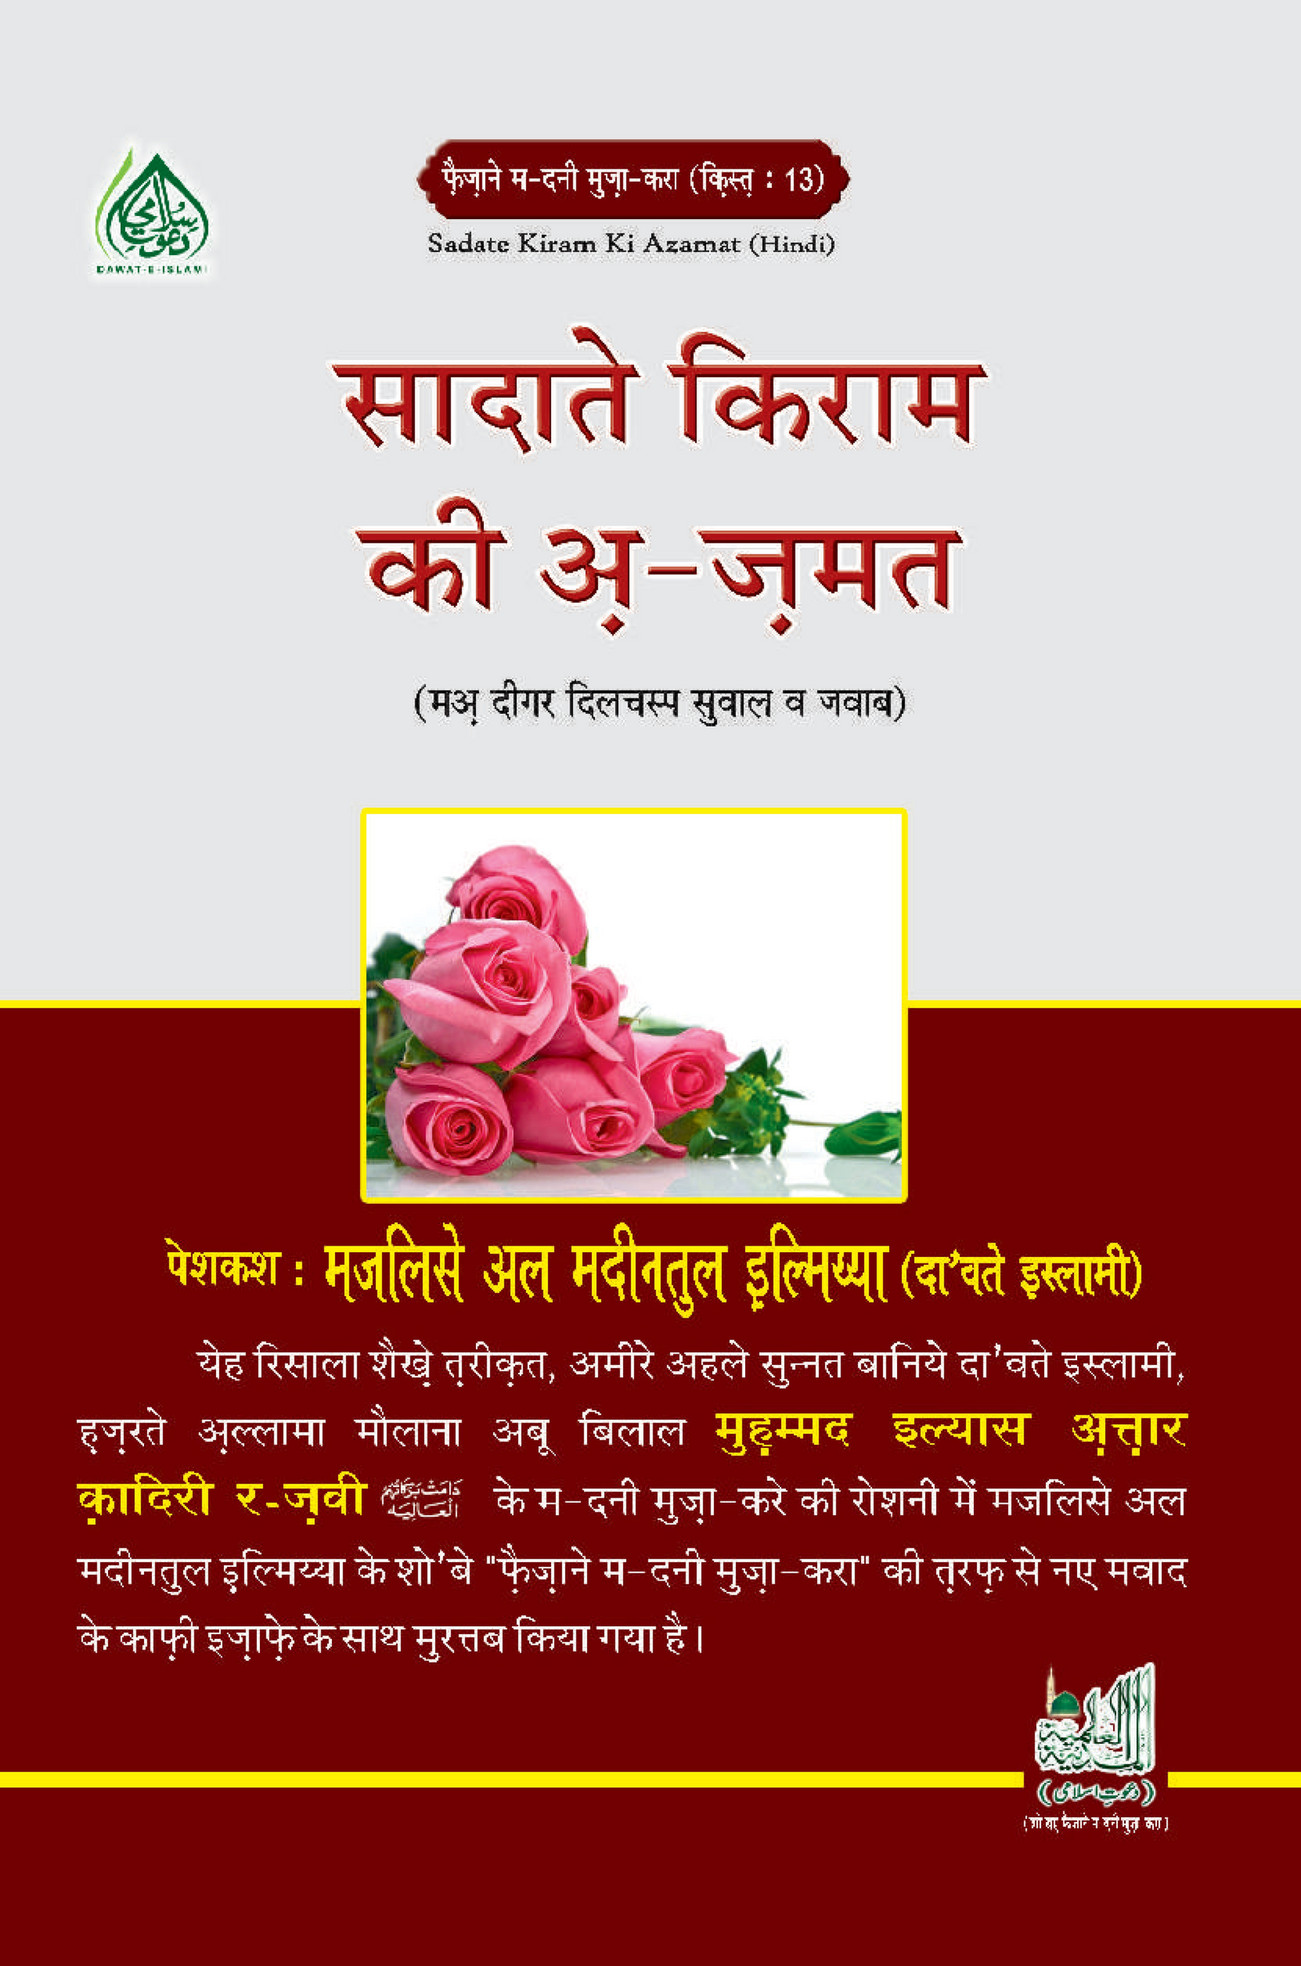 My publications - Sadat e Kiram Ki Azmat (In Hindi) - Page 1 - Created ...